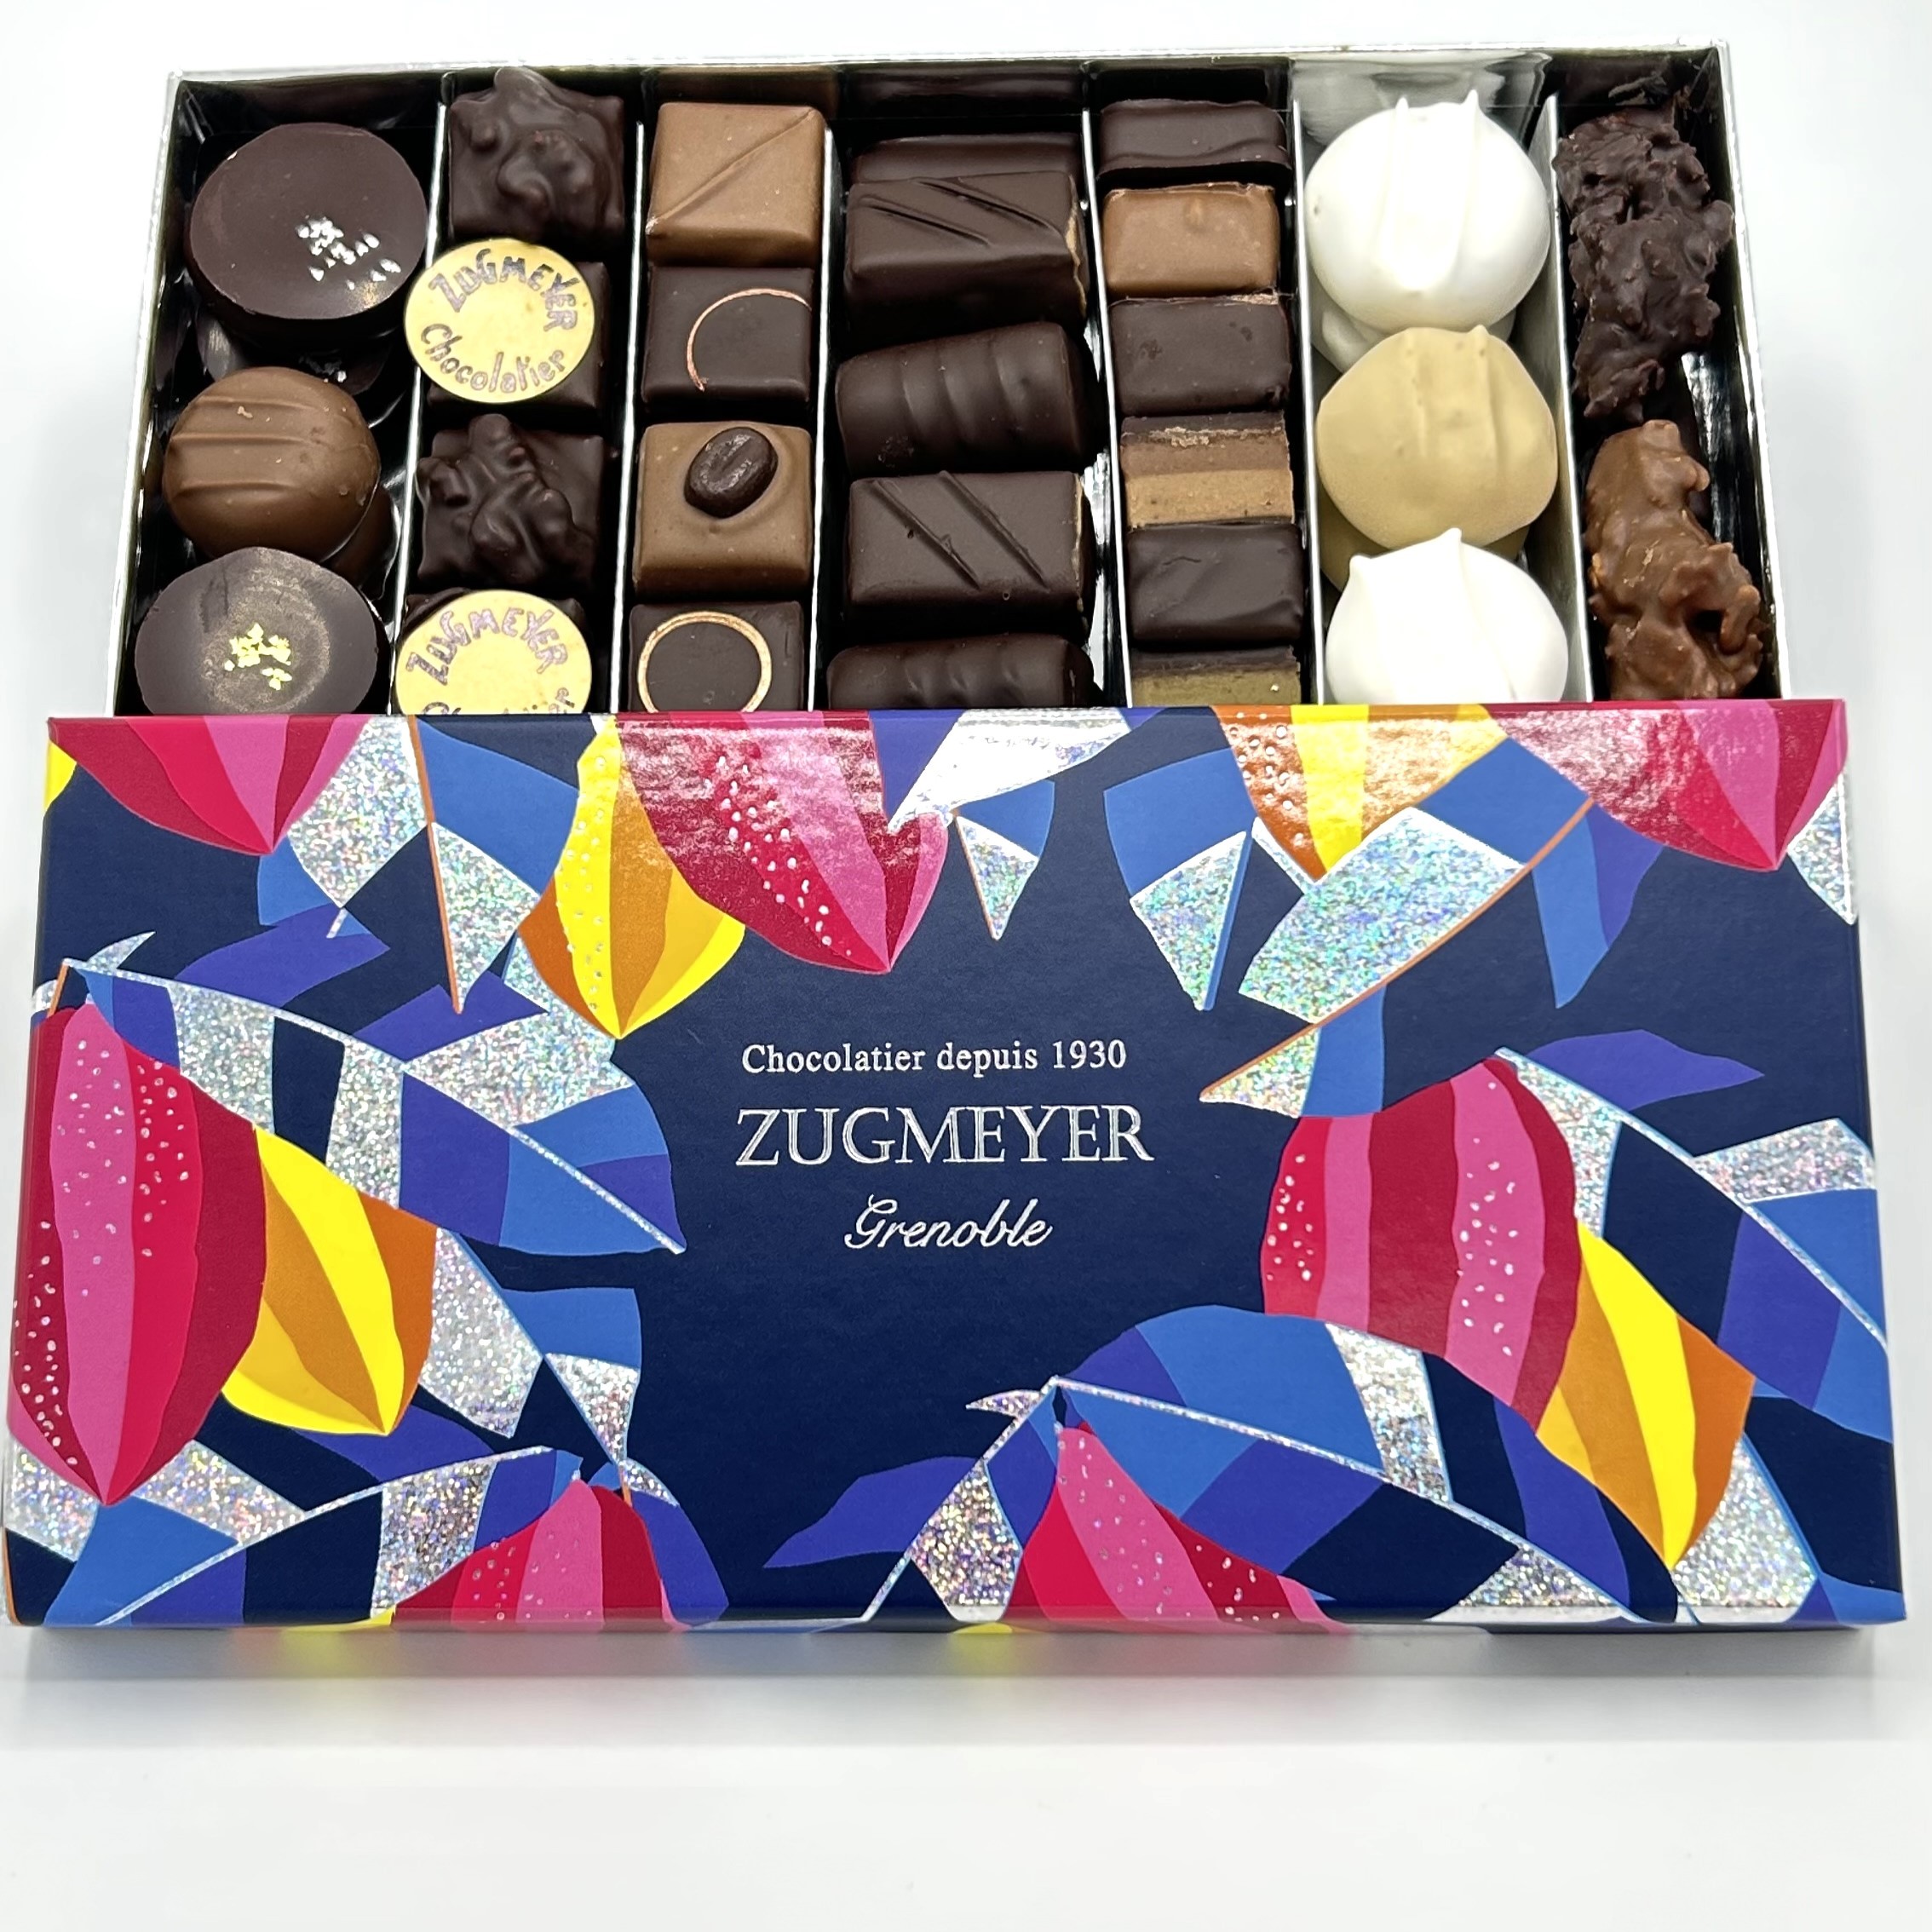 le chocolat, ses origines, sa fabrication - Chocolats Zugmeyer